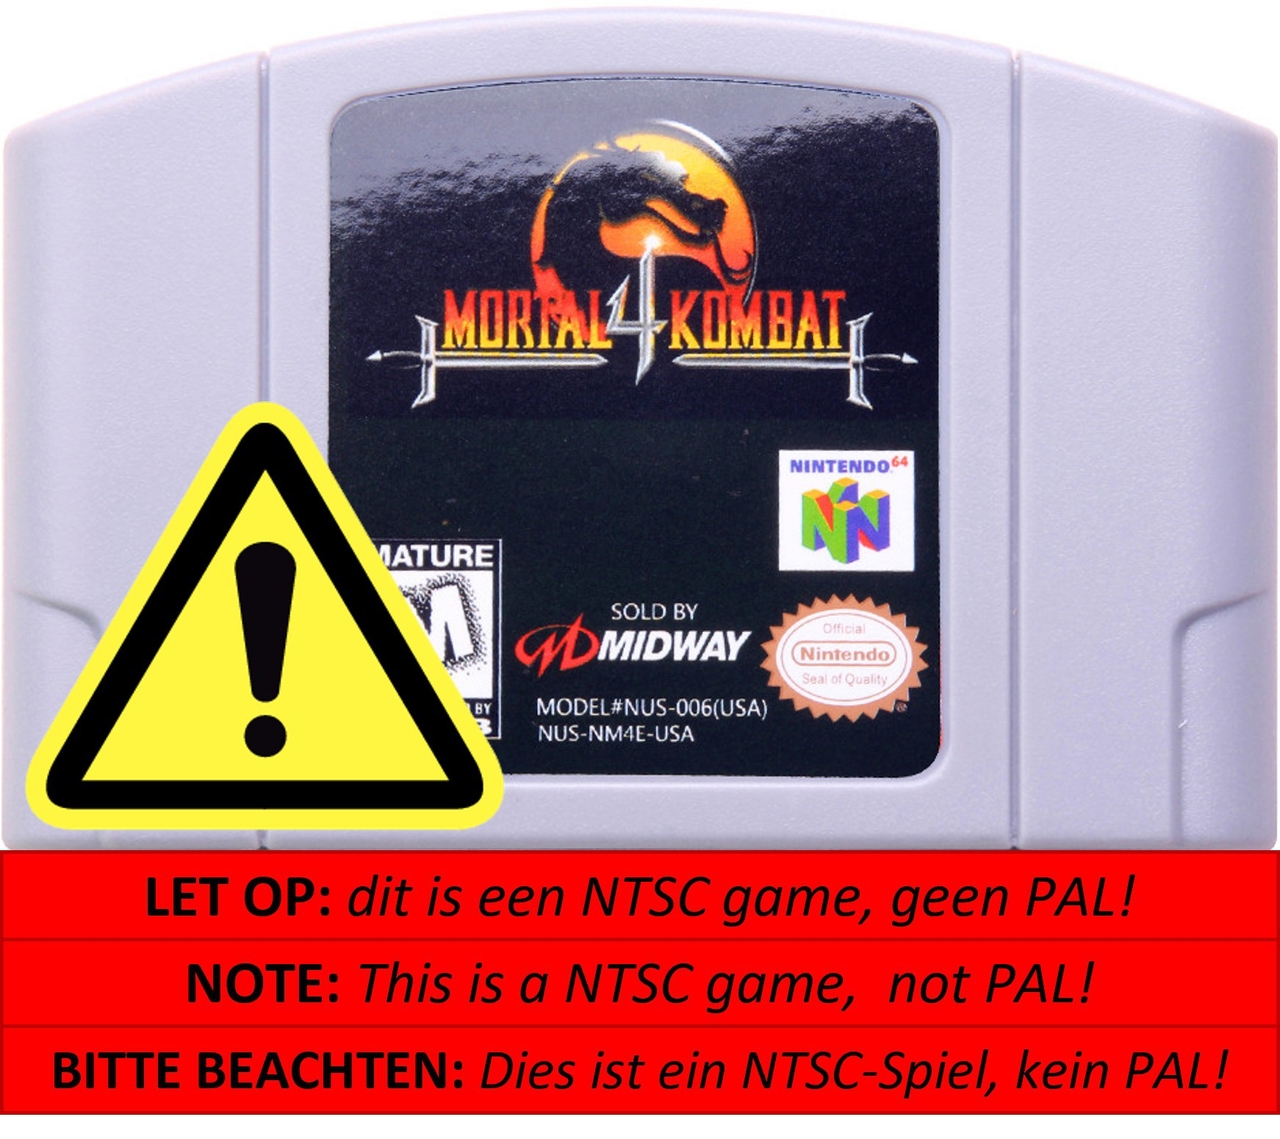 Mortal Kombat 4 [NTSC] - Nintendo 64 Games